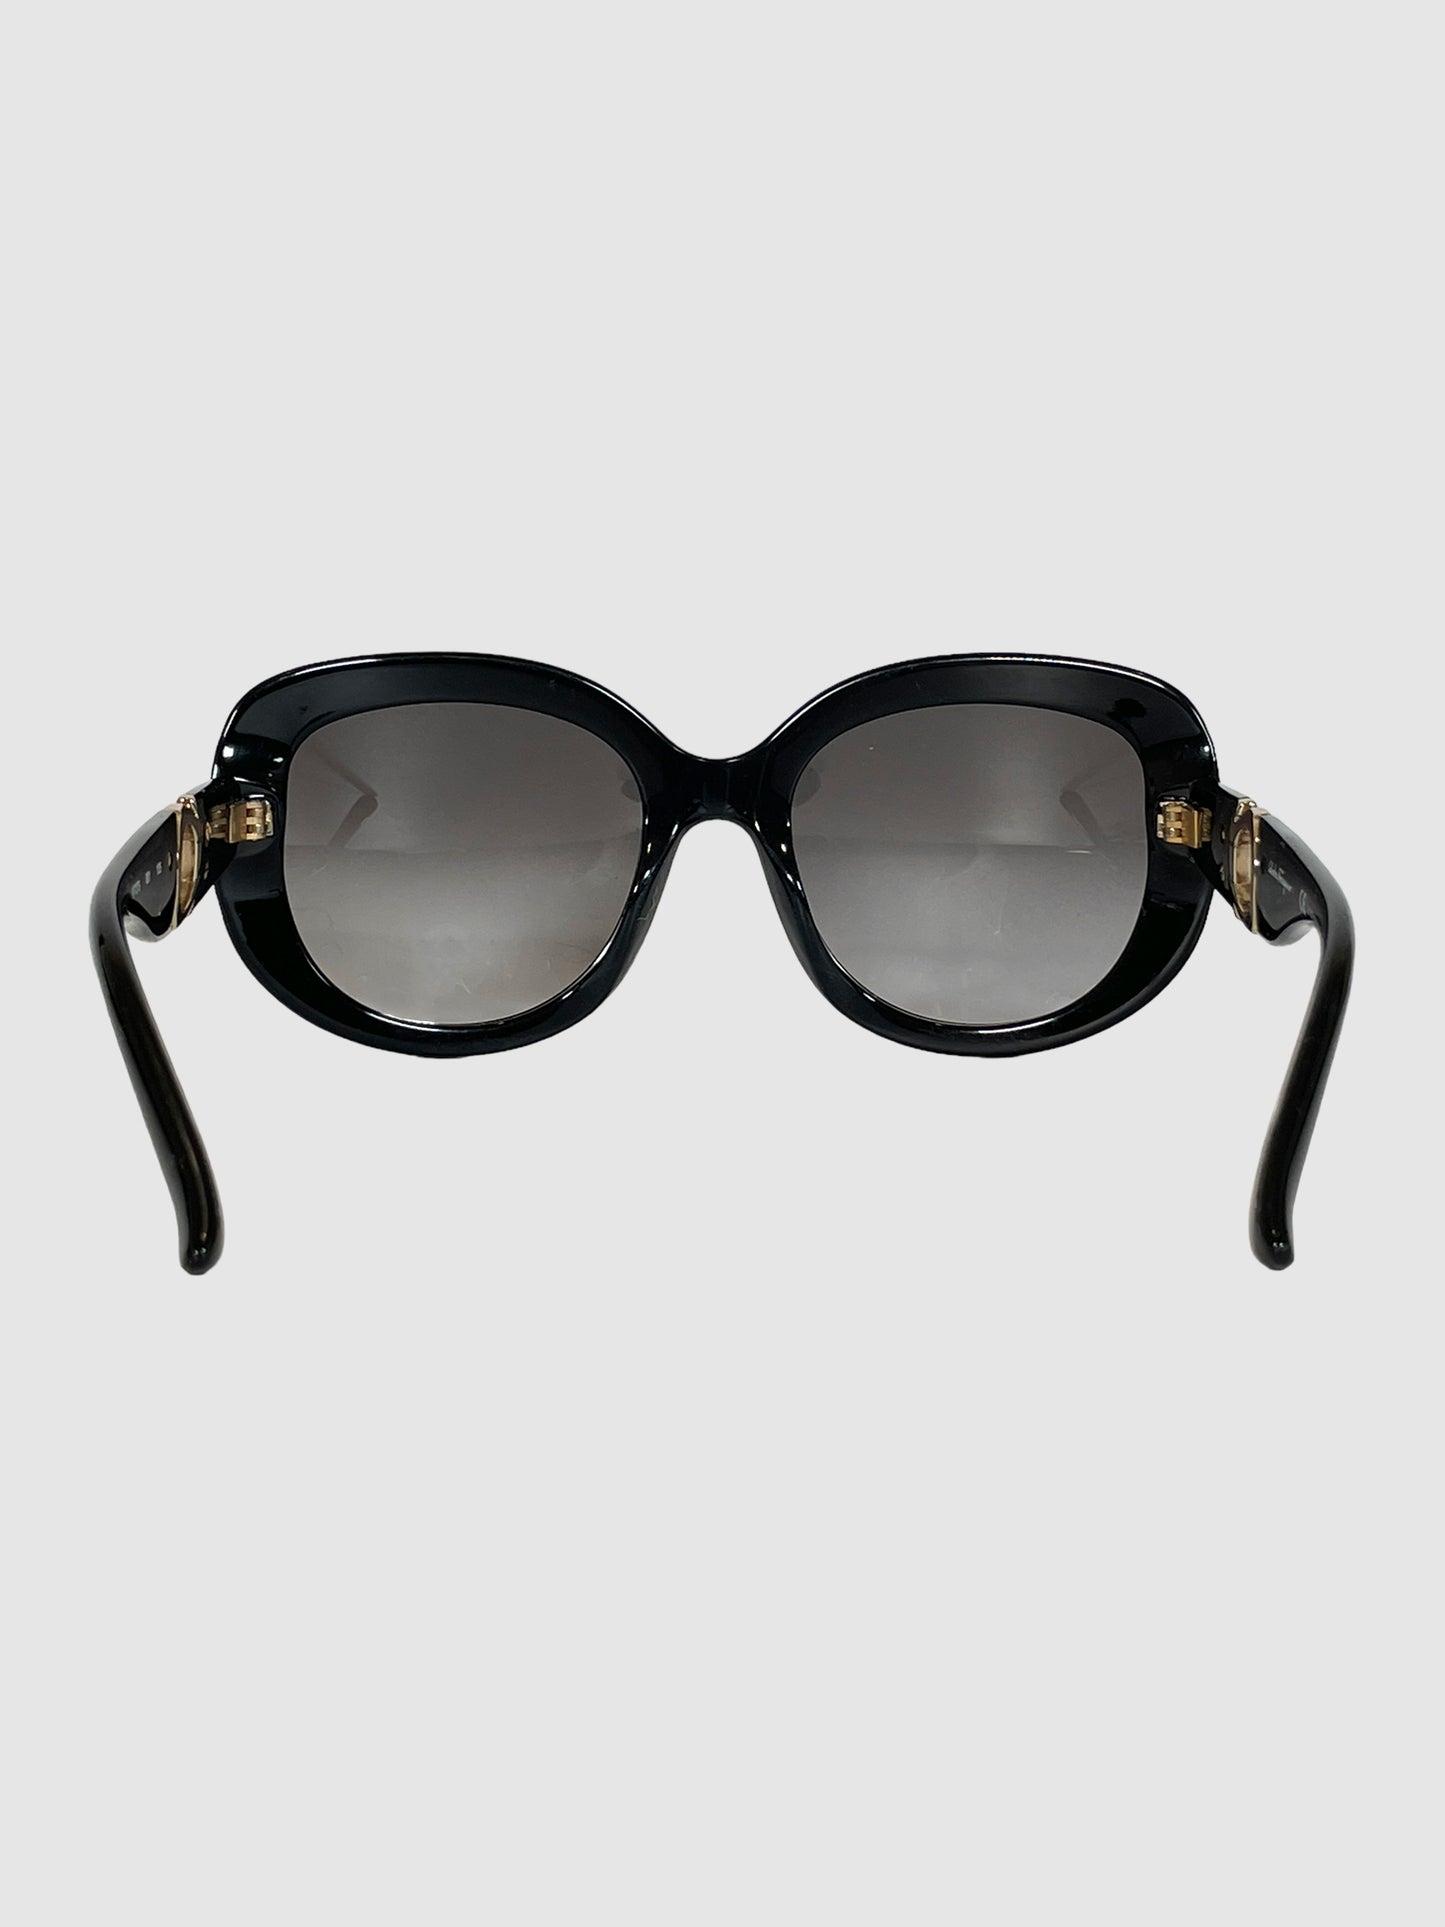 Oversized Oval Sunglasses